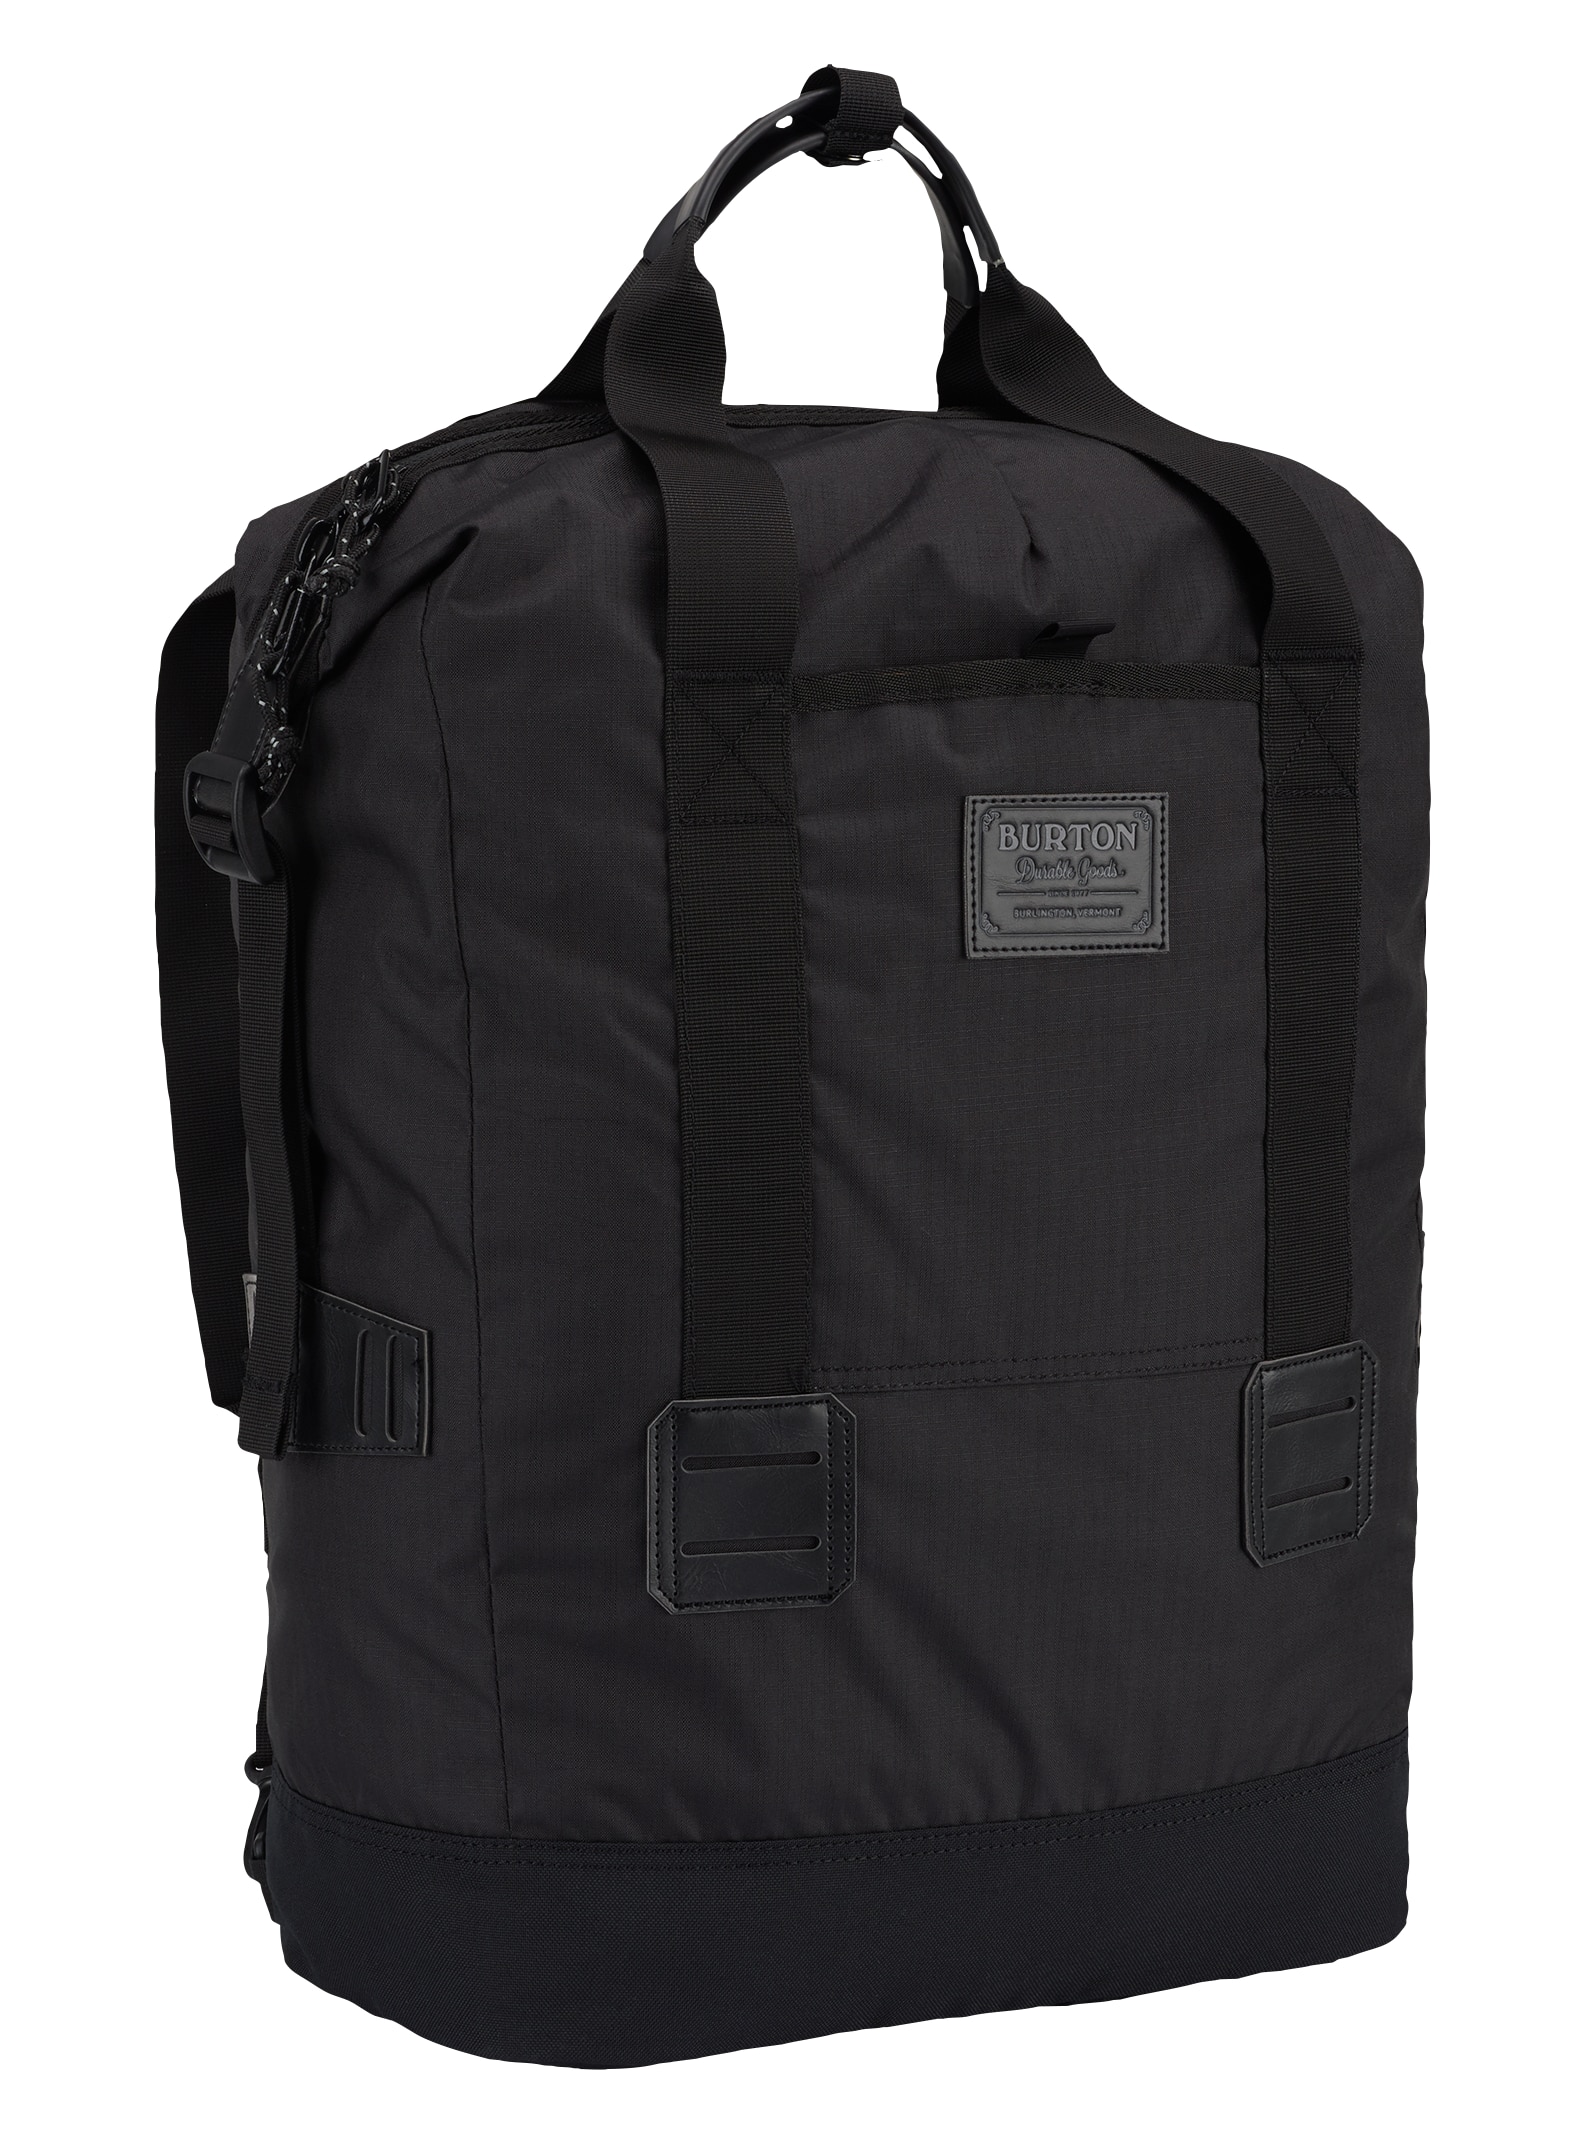 Burton Tinder Tote 25L Backpack | Burton.com Winter 2020 CZ